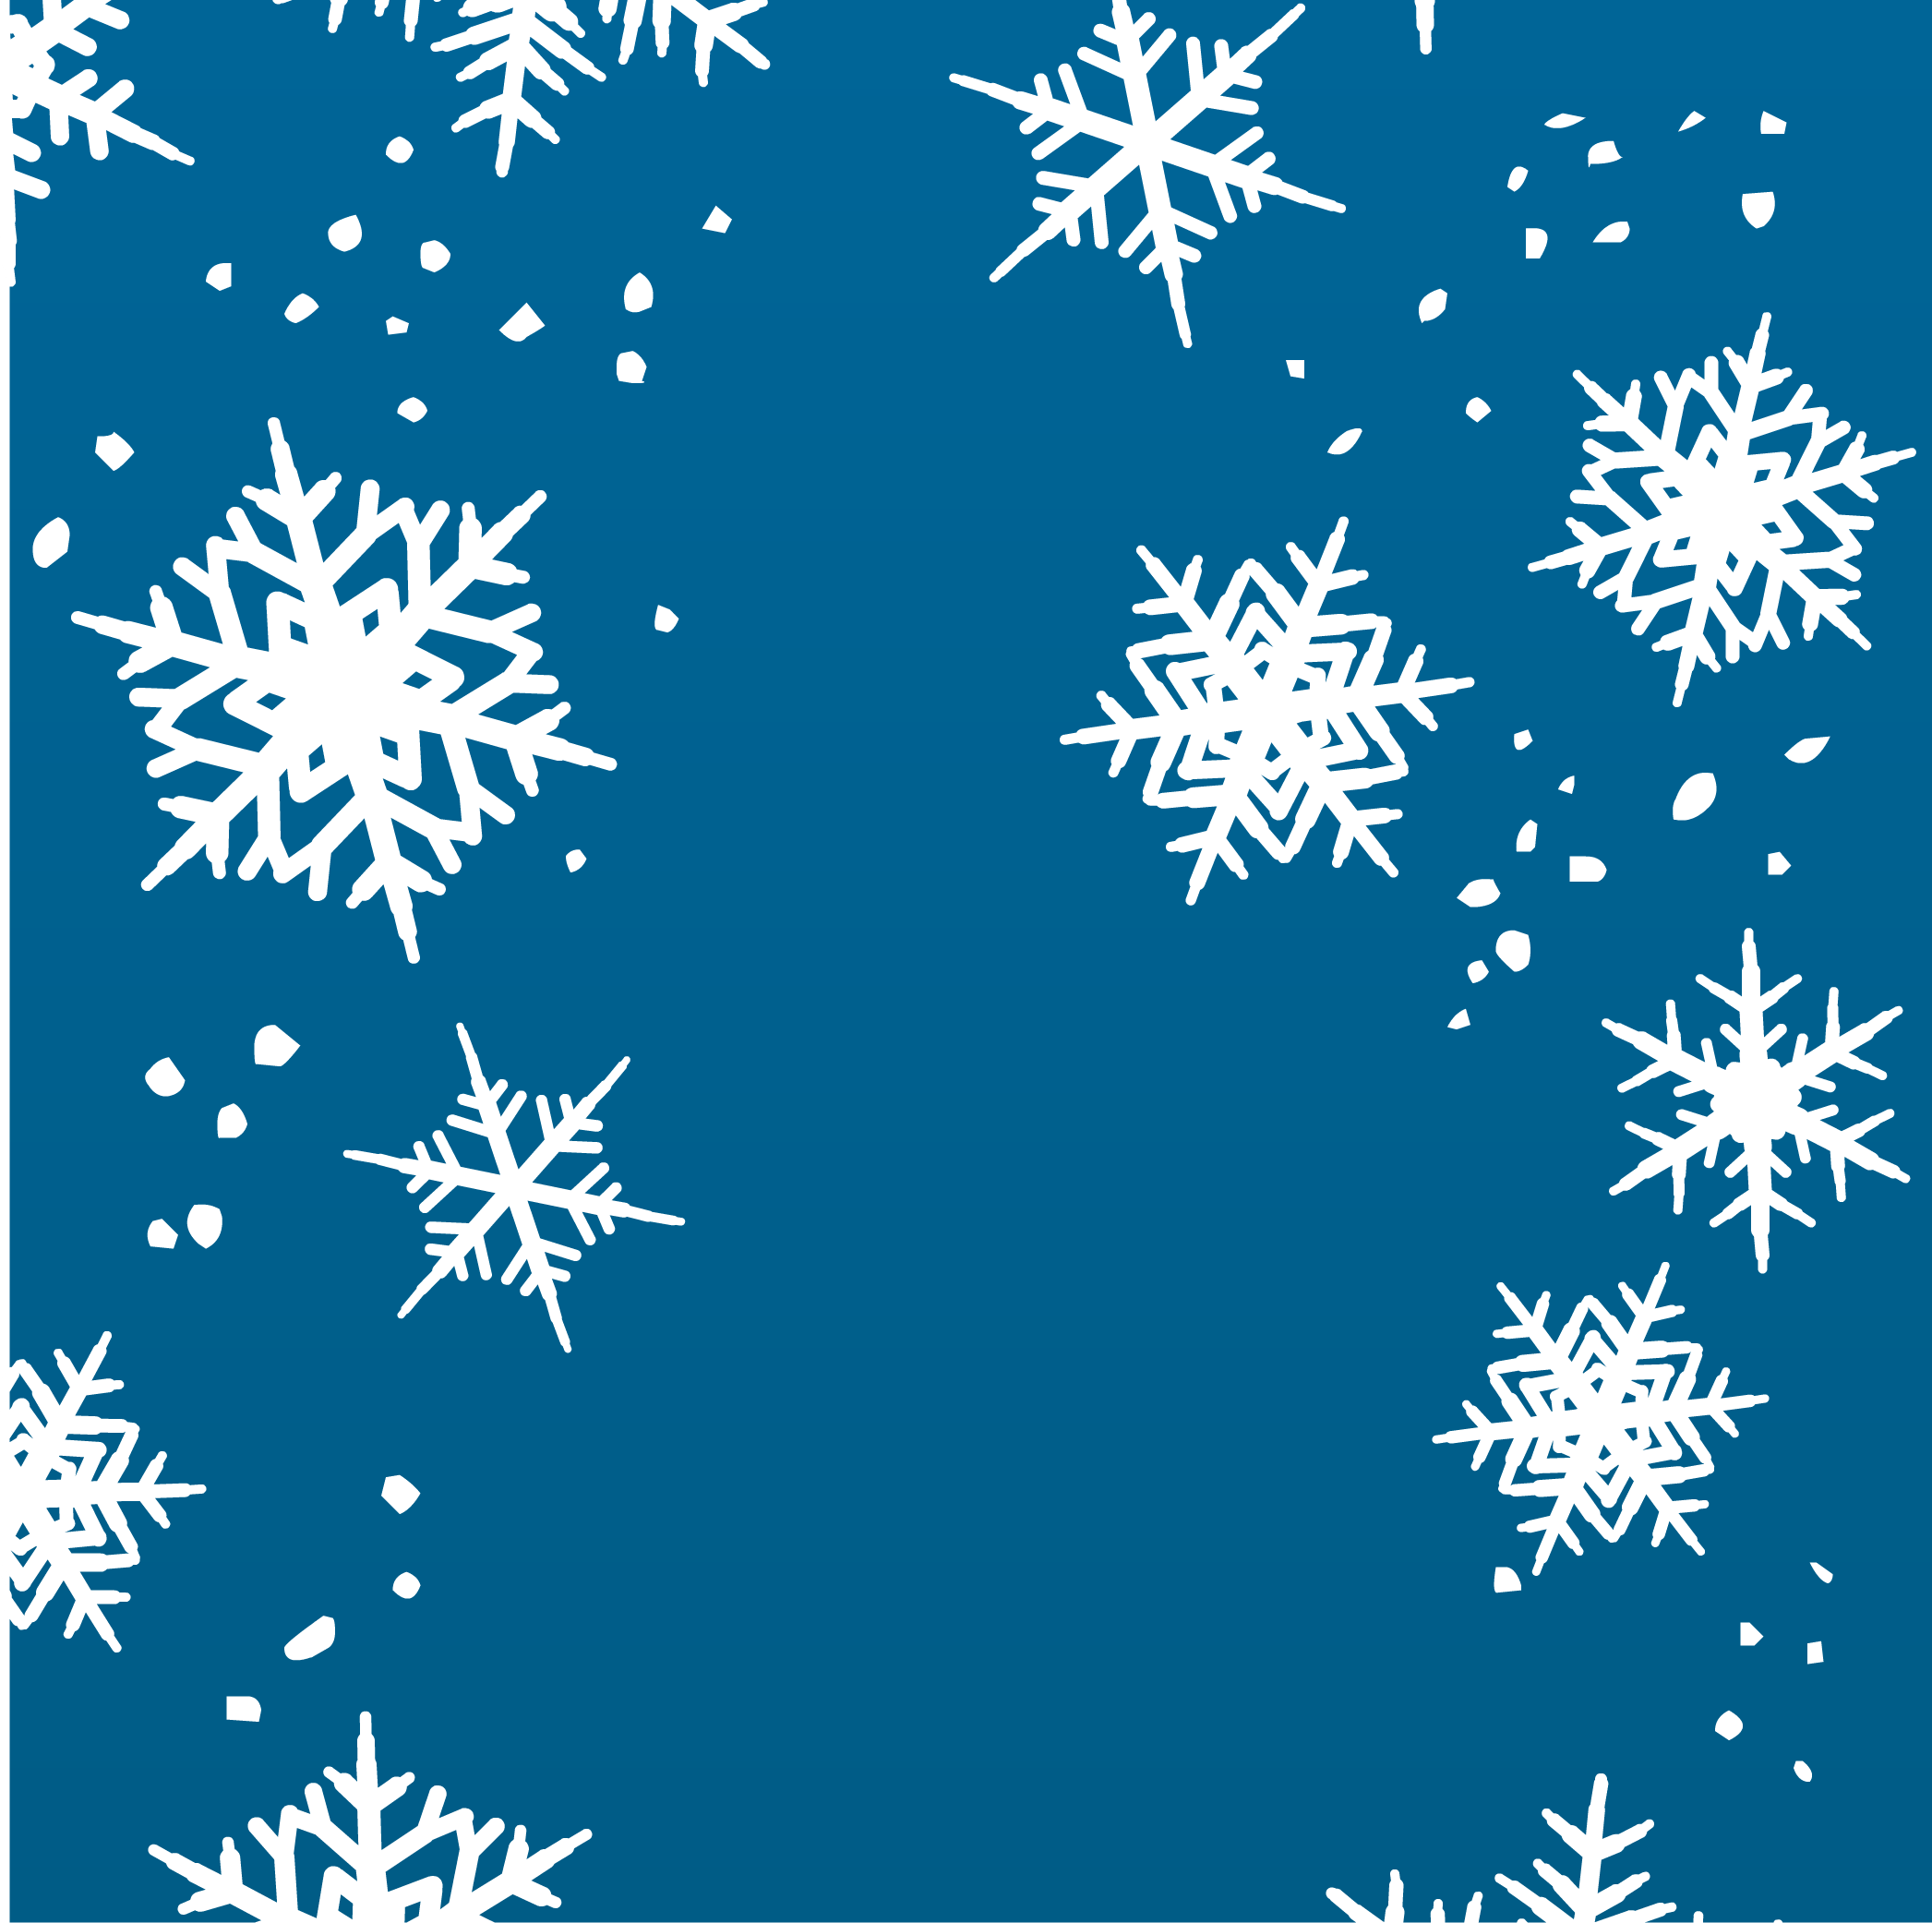 Snowflakes Background Club Penguin Wiki The Editable